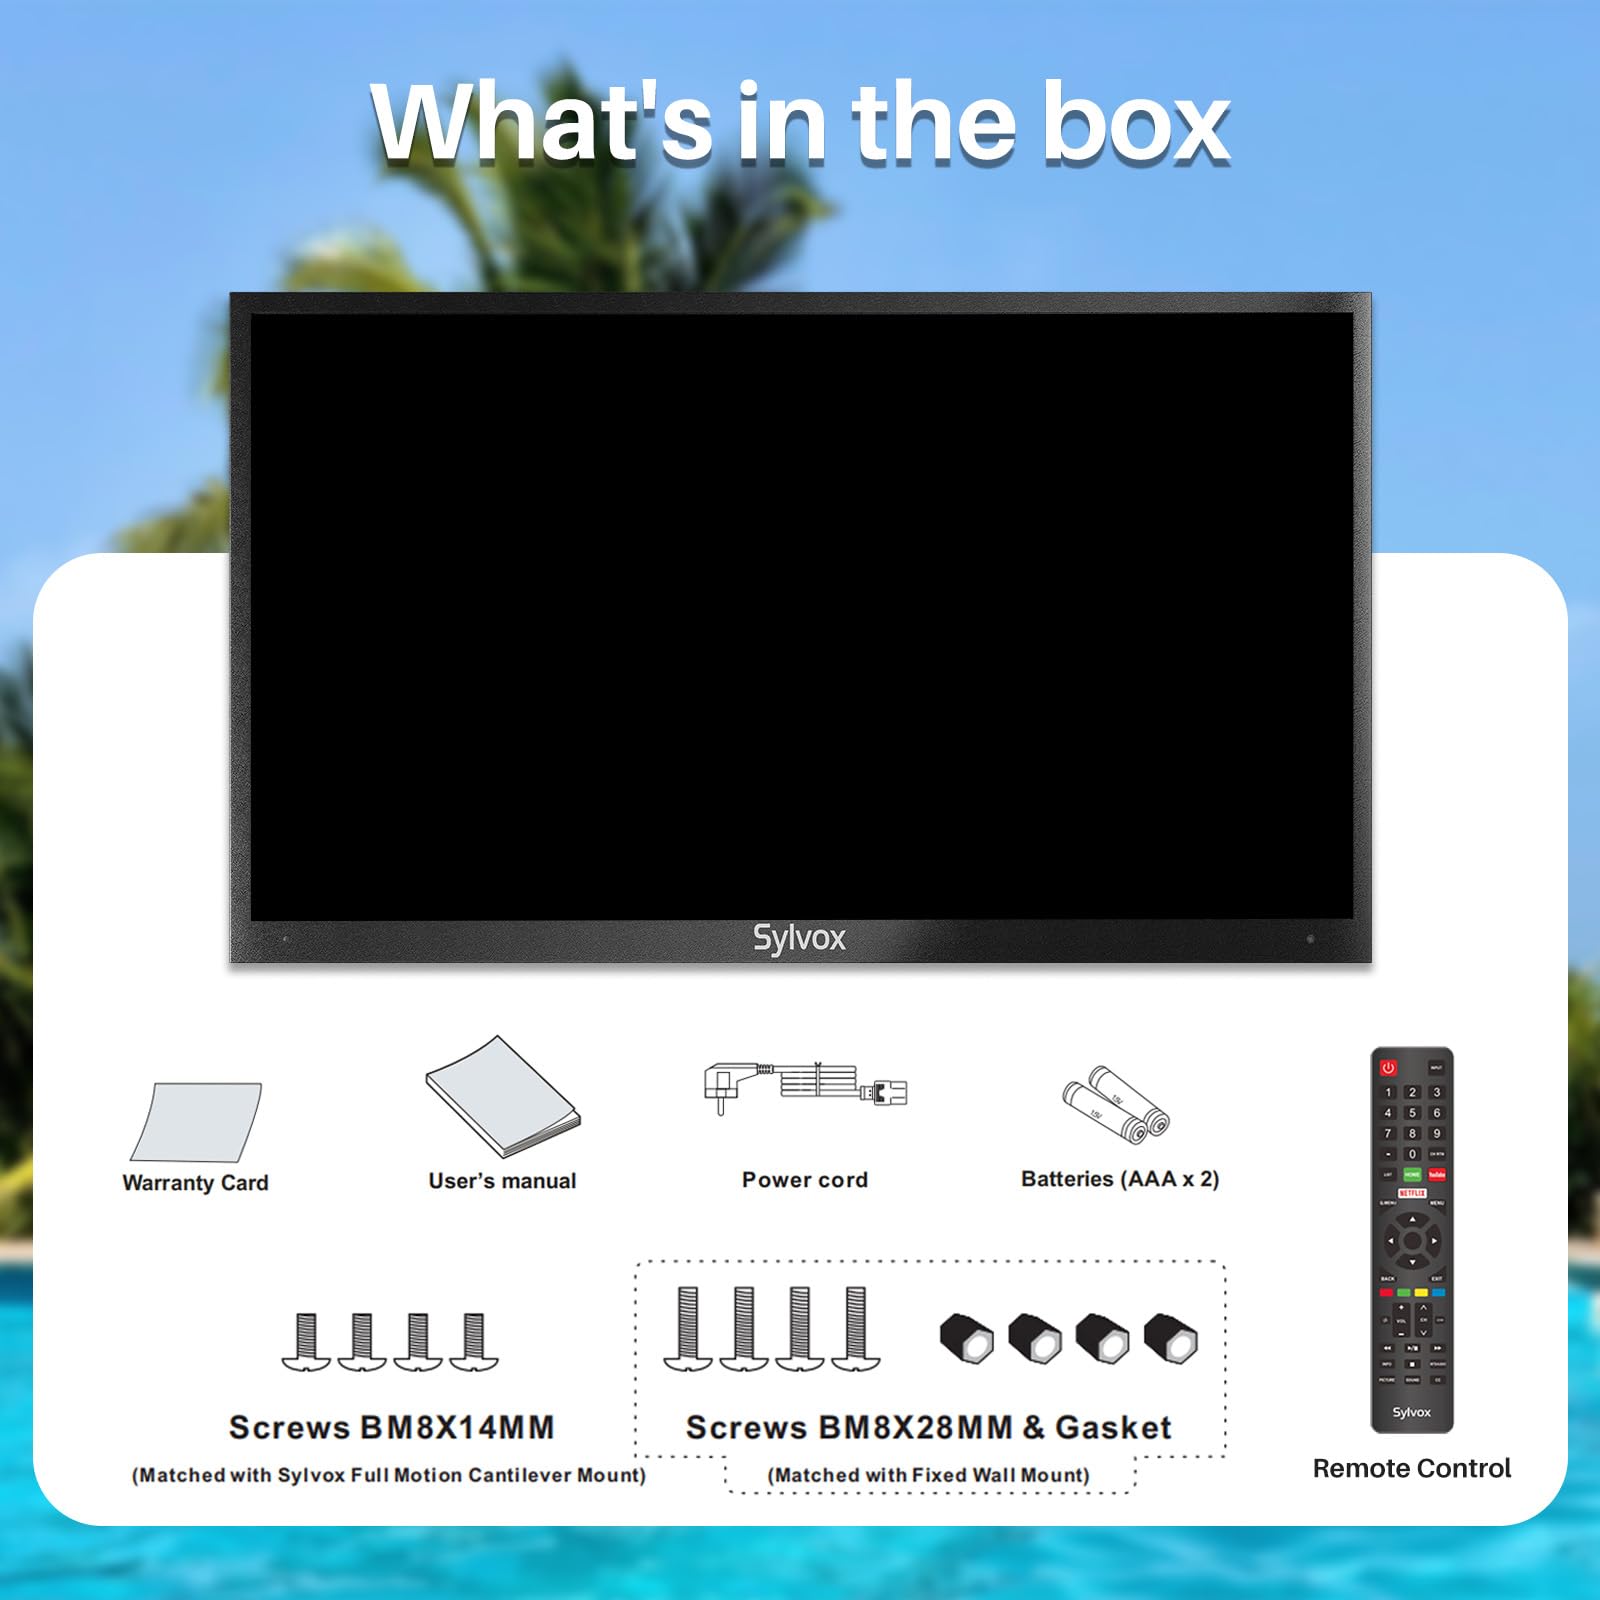 SYLVOX Outdoor TV, 43'' Full Sun 4K Outside TV Built-in APP, 2000nits High Brightness, IP55 Waterproof, Support WiFi Bluetooth